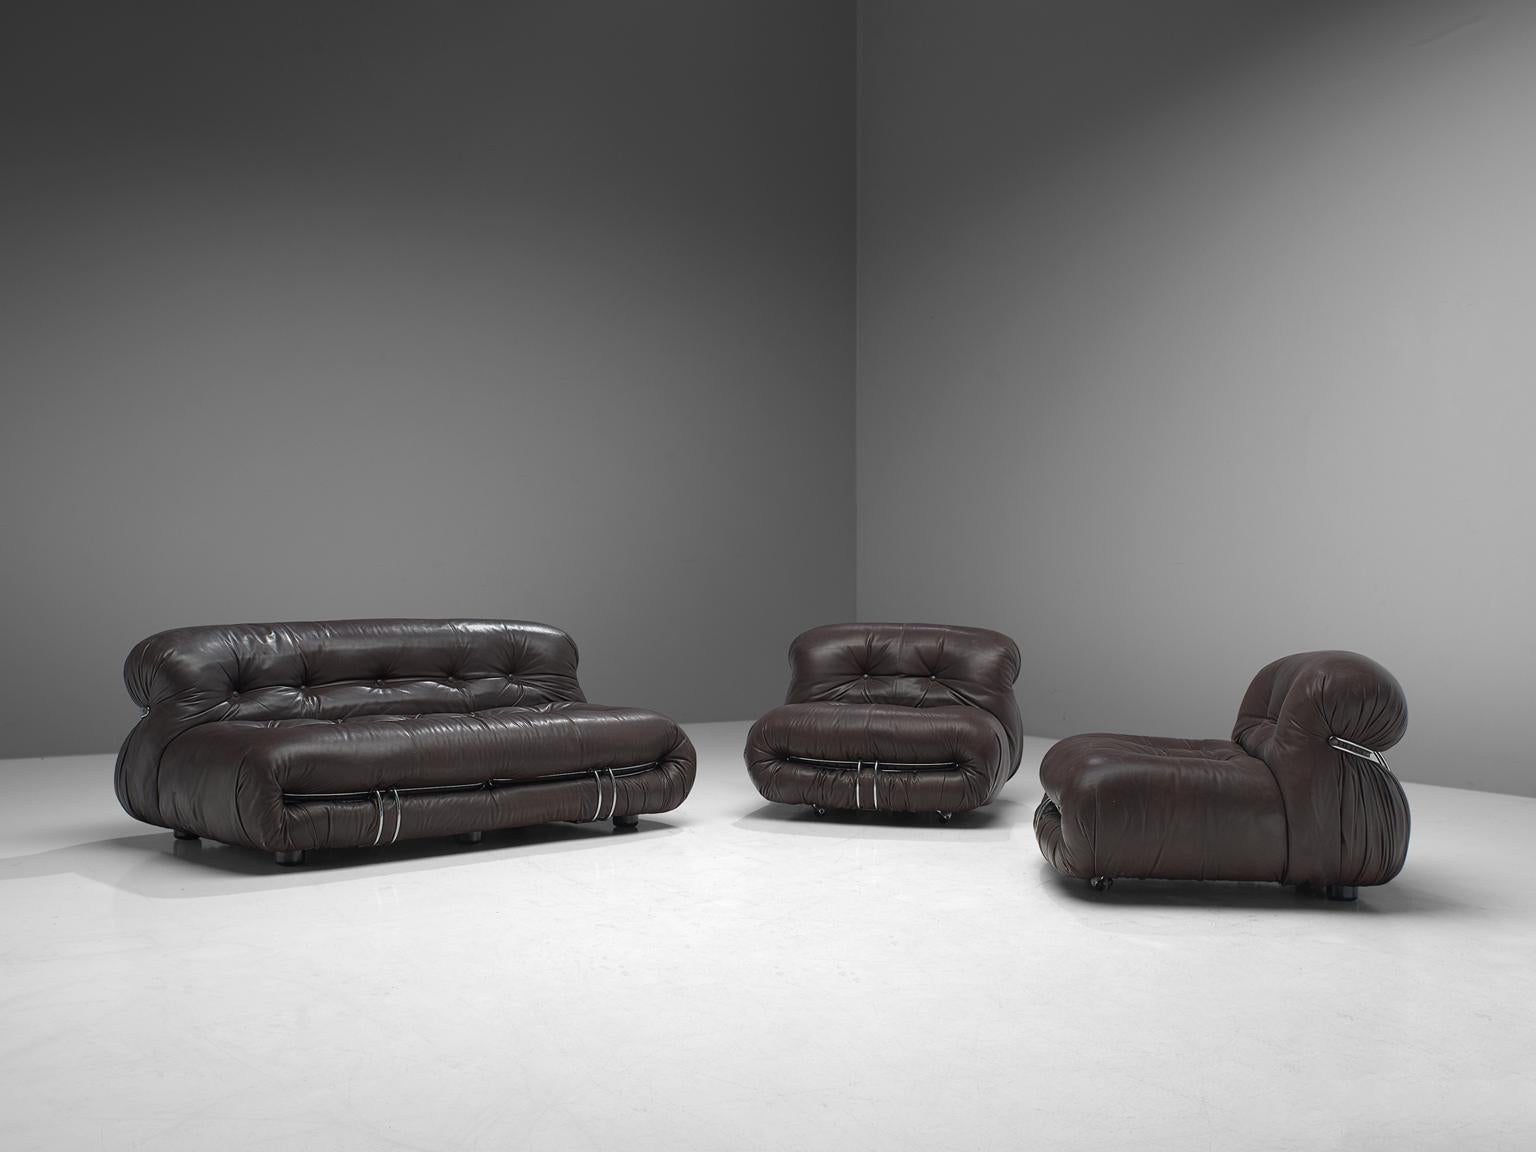 Afra & Tobia Scarpa 'Soriana' Sofa in Chocolate Brown Leather 1